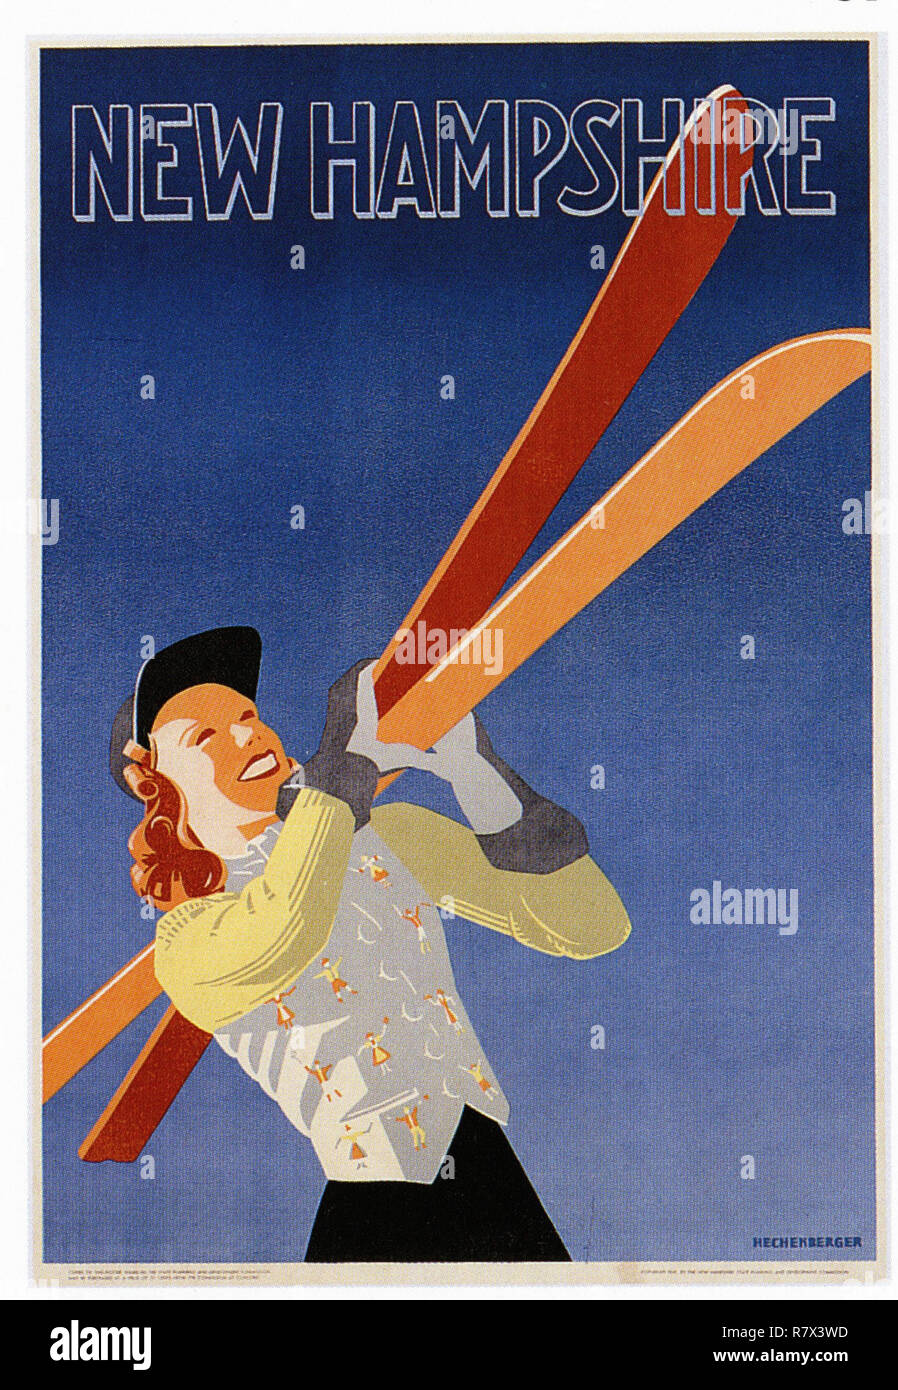 New Hampshire Ski United States America Vintage Travel Advertisement Art Poster 